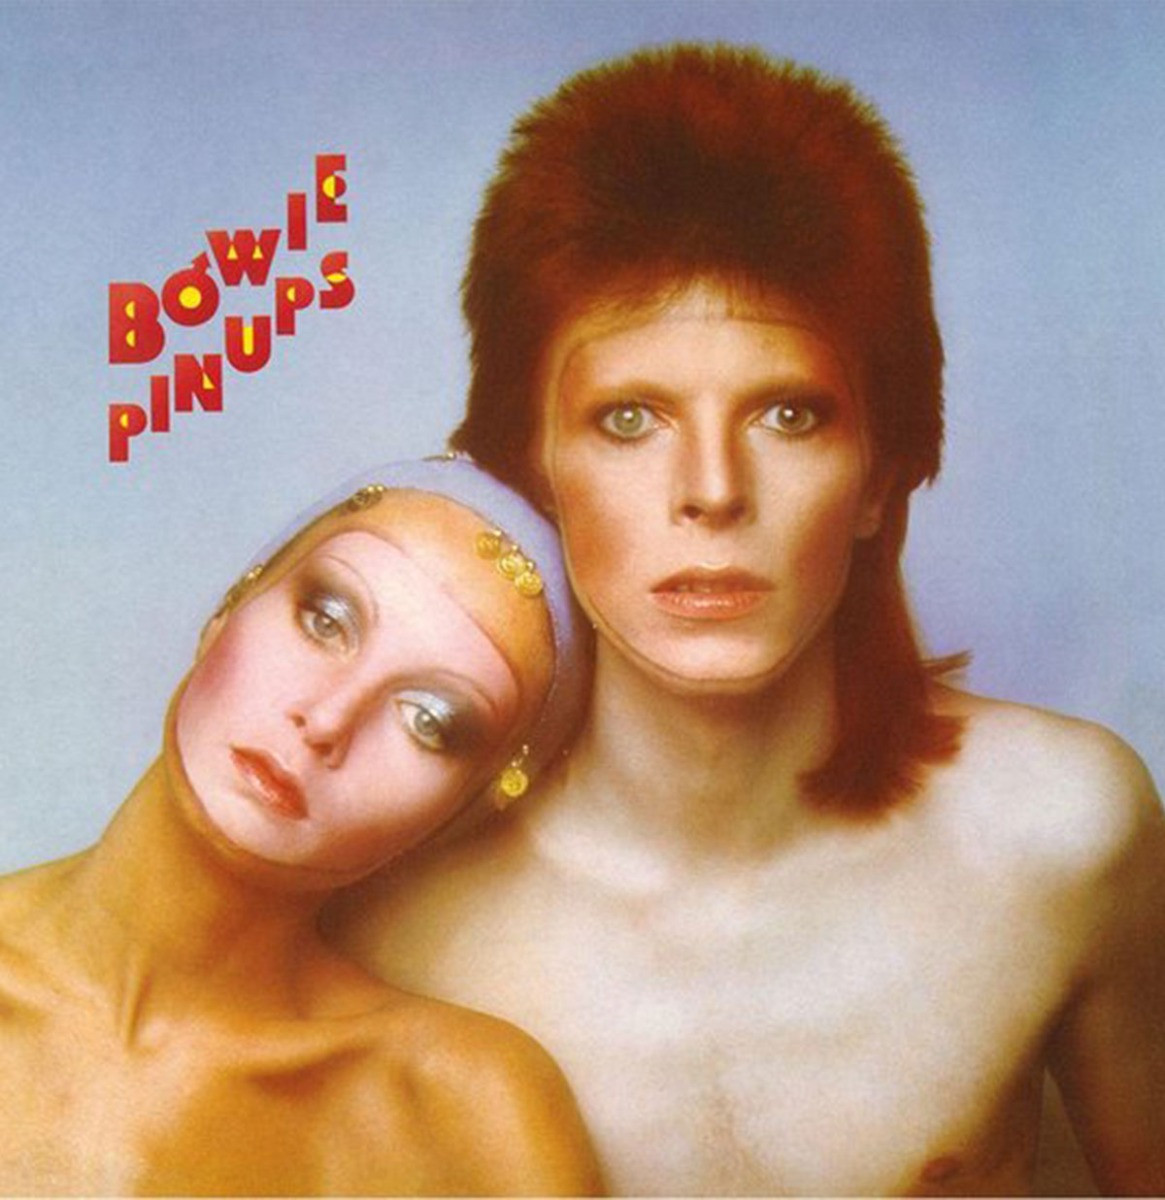 David Bowie - Pinups LP